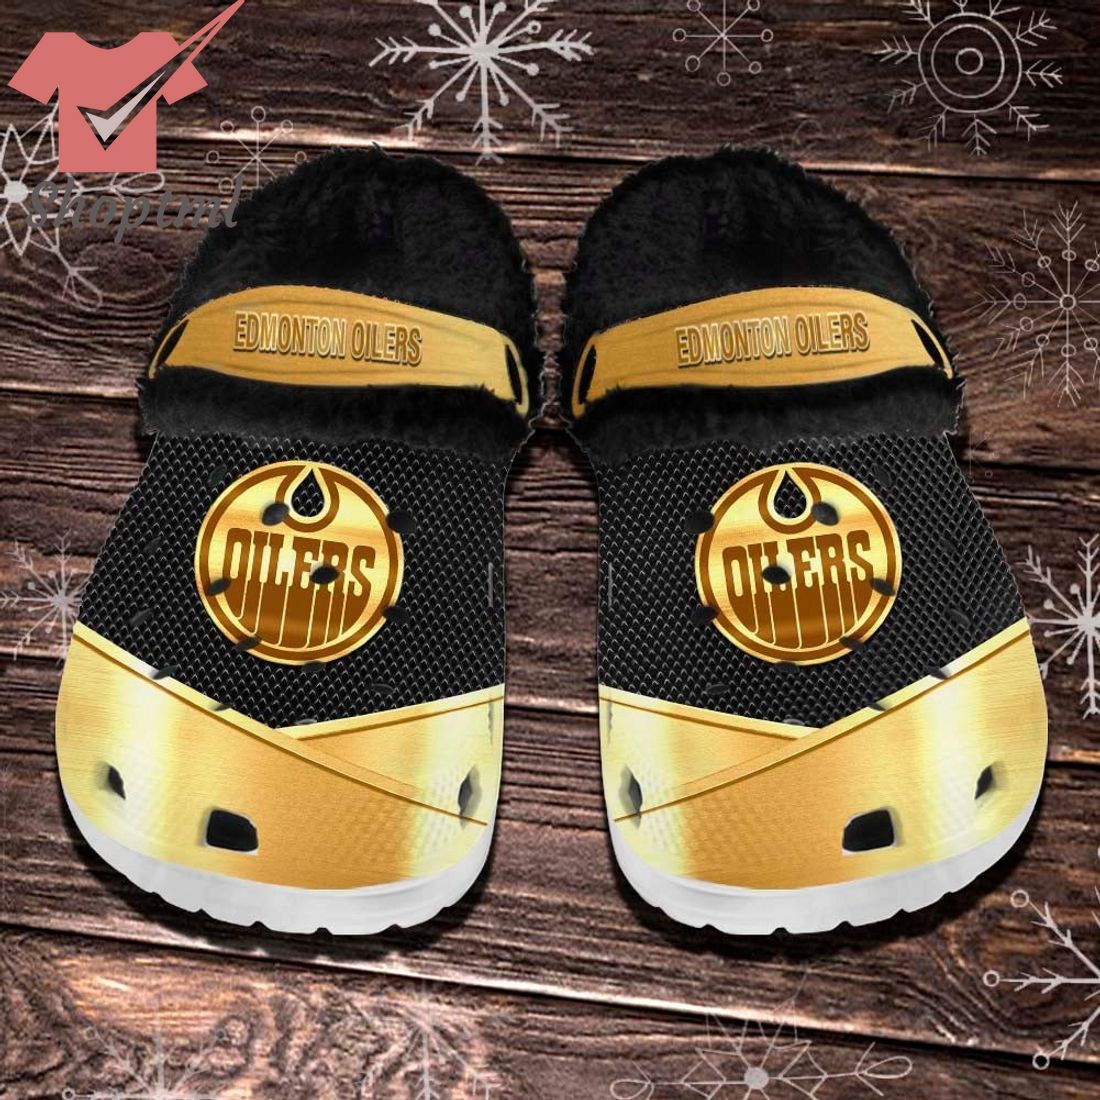 Edmonton Oilers NHL Fleece Crocs Clogs Shoes